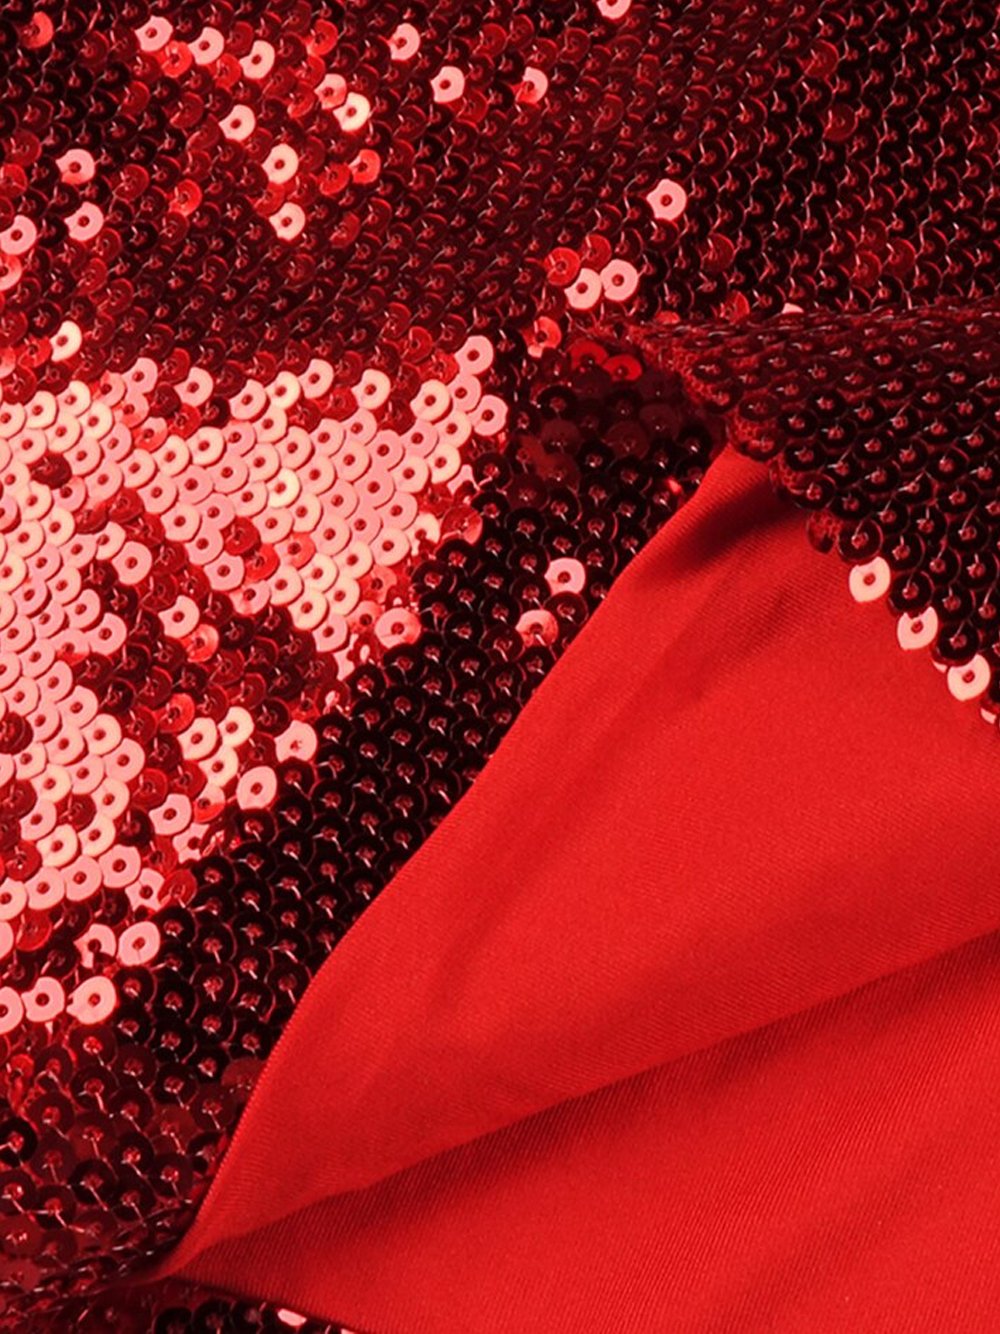 REDY Sequins Midi Dress